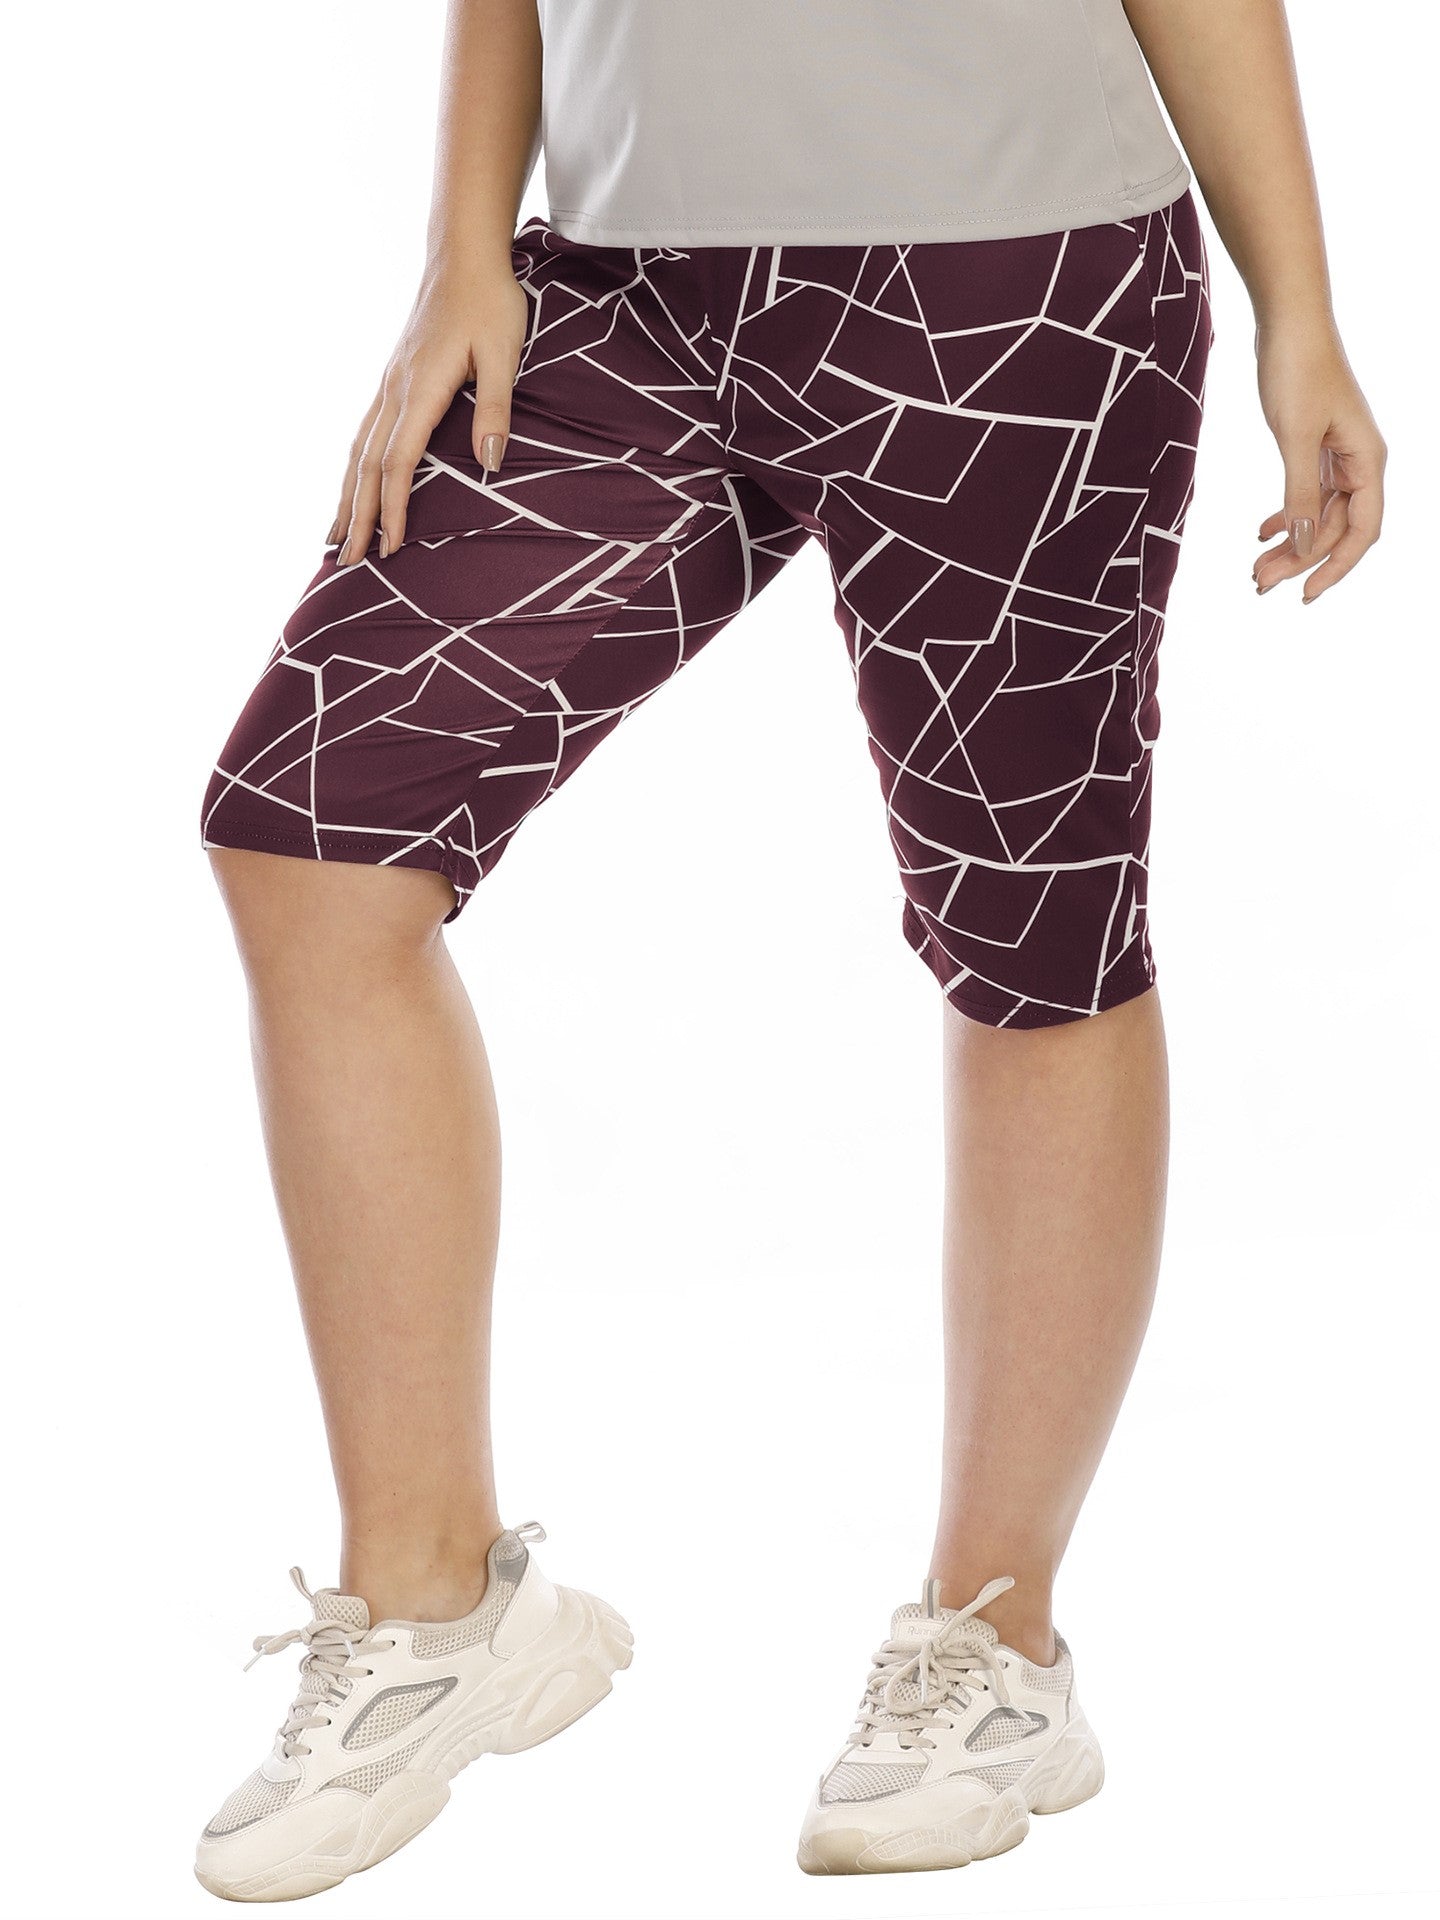 Plus Irregular Print Cropped Pants Casual Shorts Sweatpants